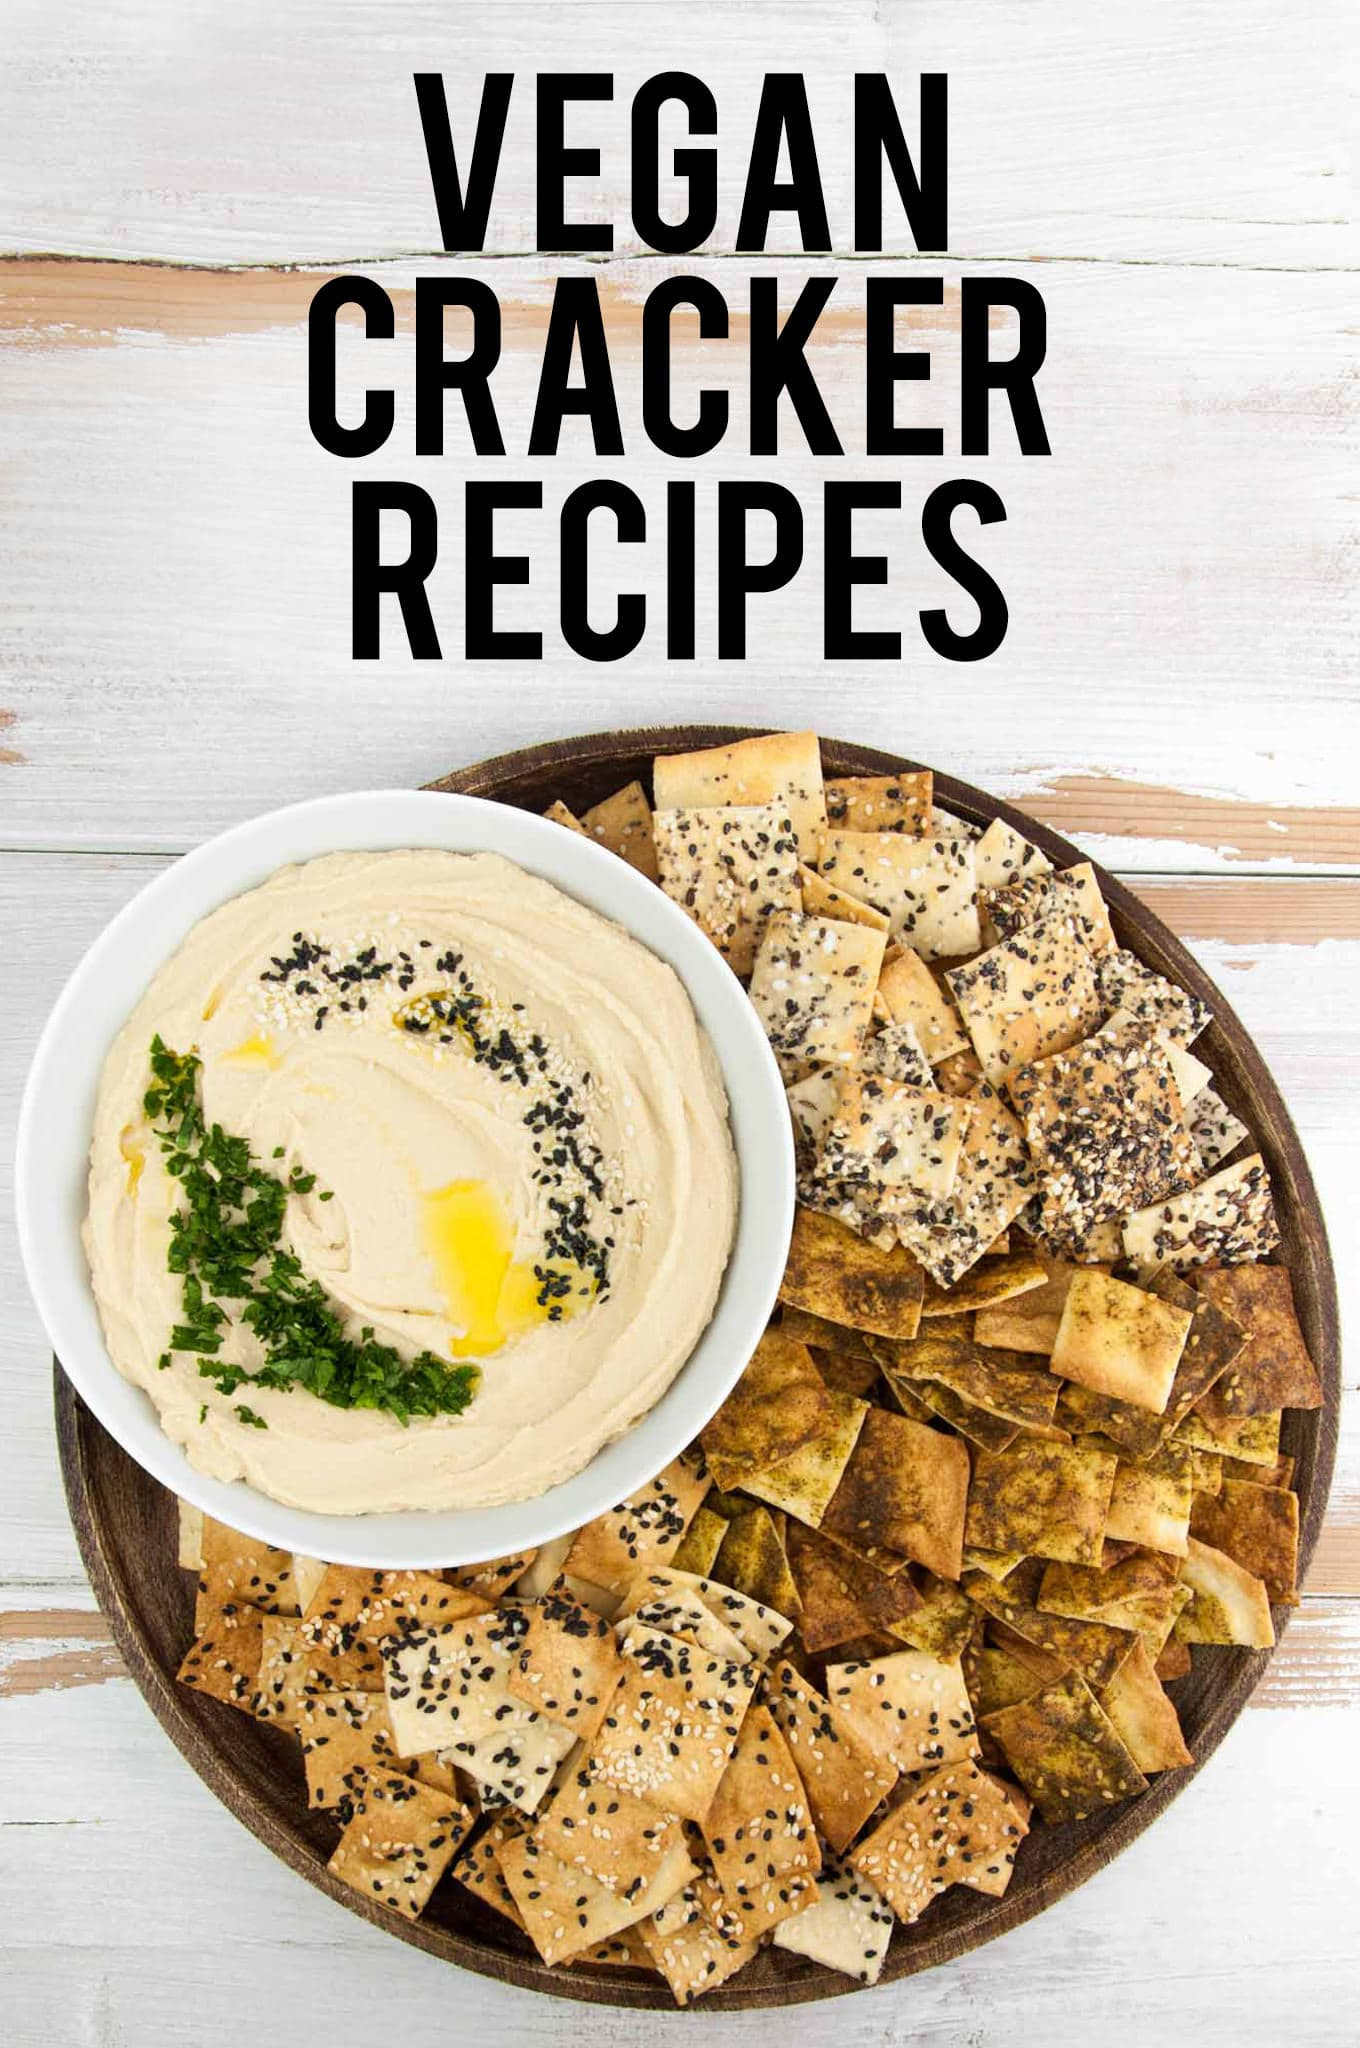 Vegan Recipes Pinterest
 10 Easy Vegan Cracker Recipes